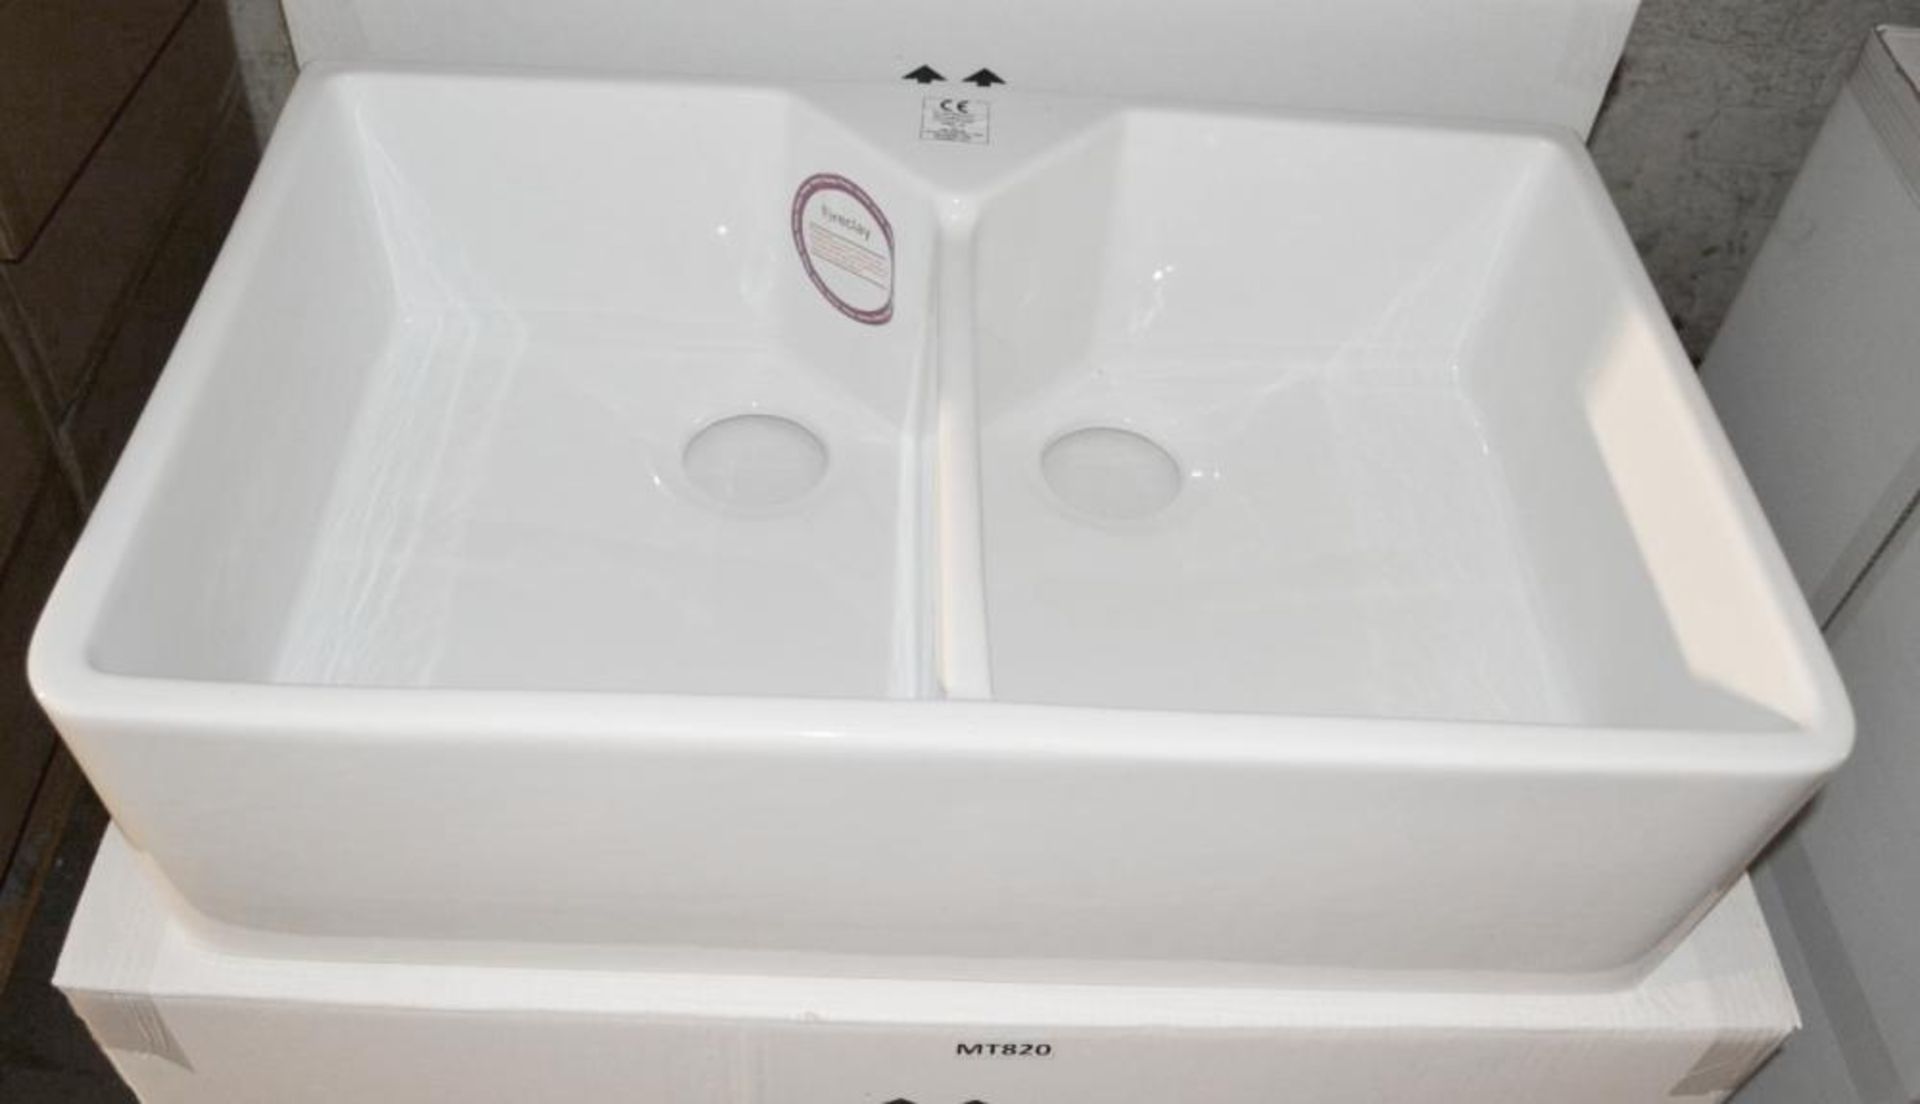 1 x RAK Ceramics Gourmet Sink 10 2-Bowl White Ceramic Kitchen Sink - Dimensions: W80 x D50 x H22cm - - Image 3 of 6